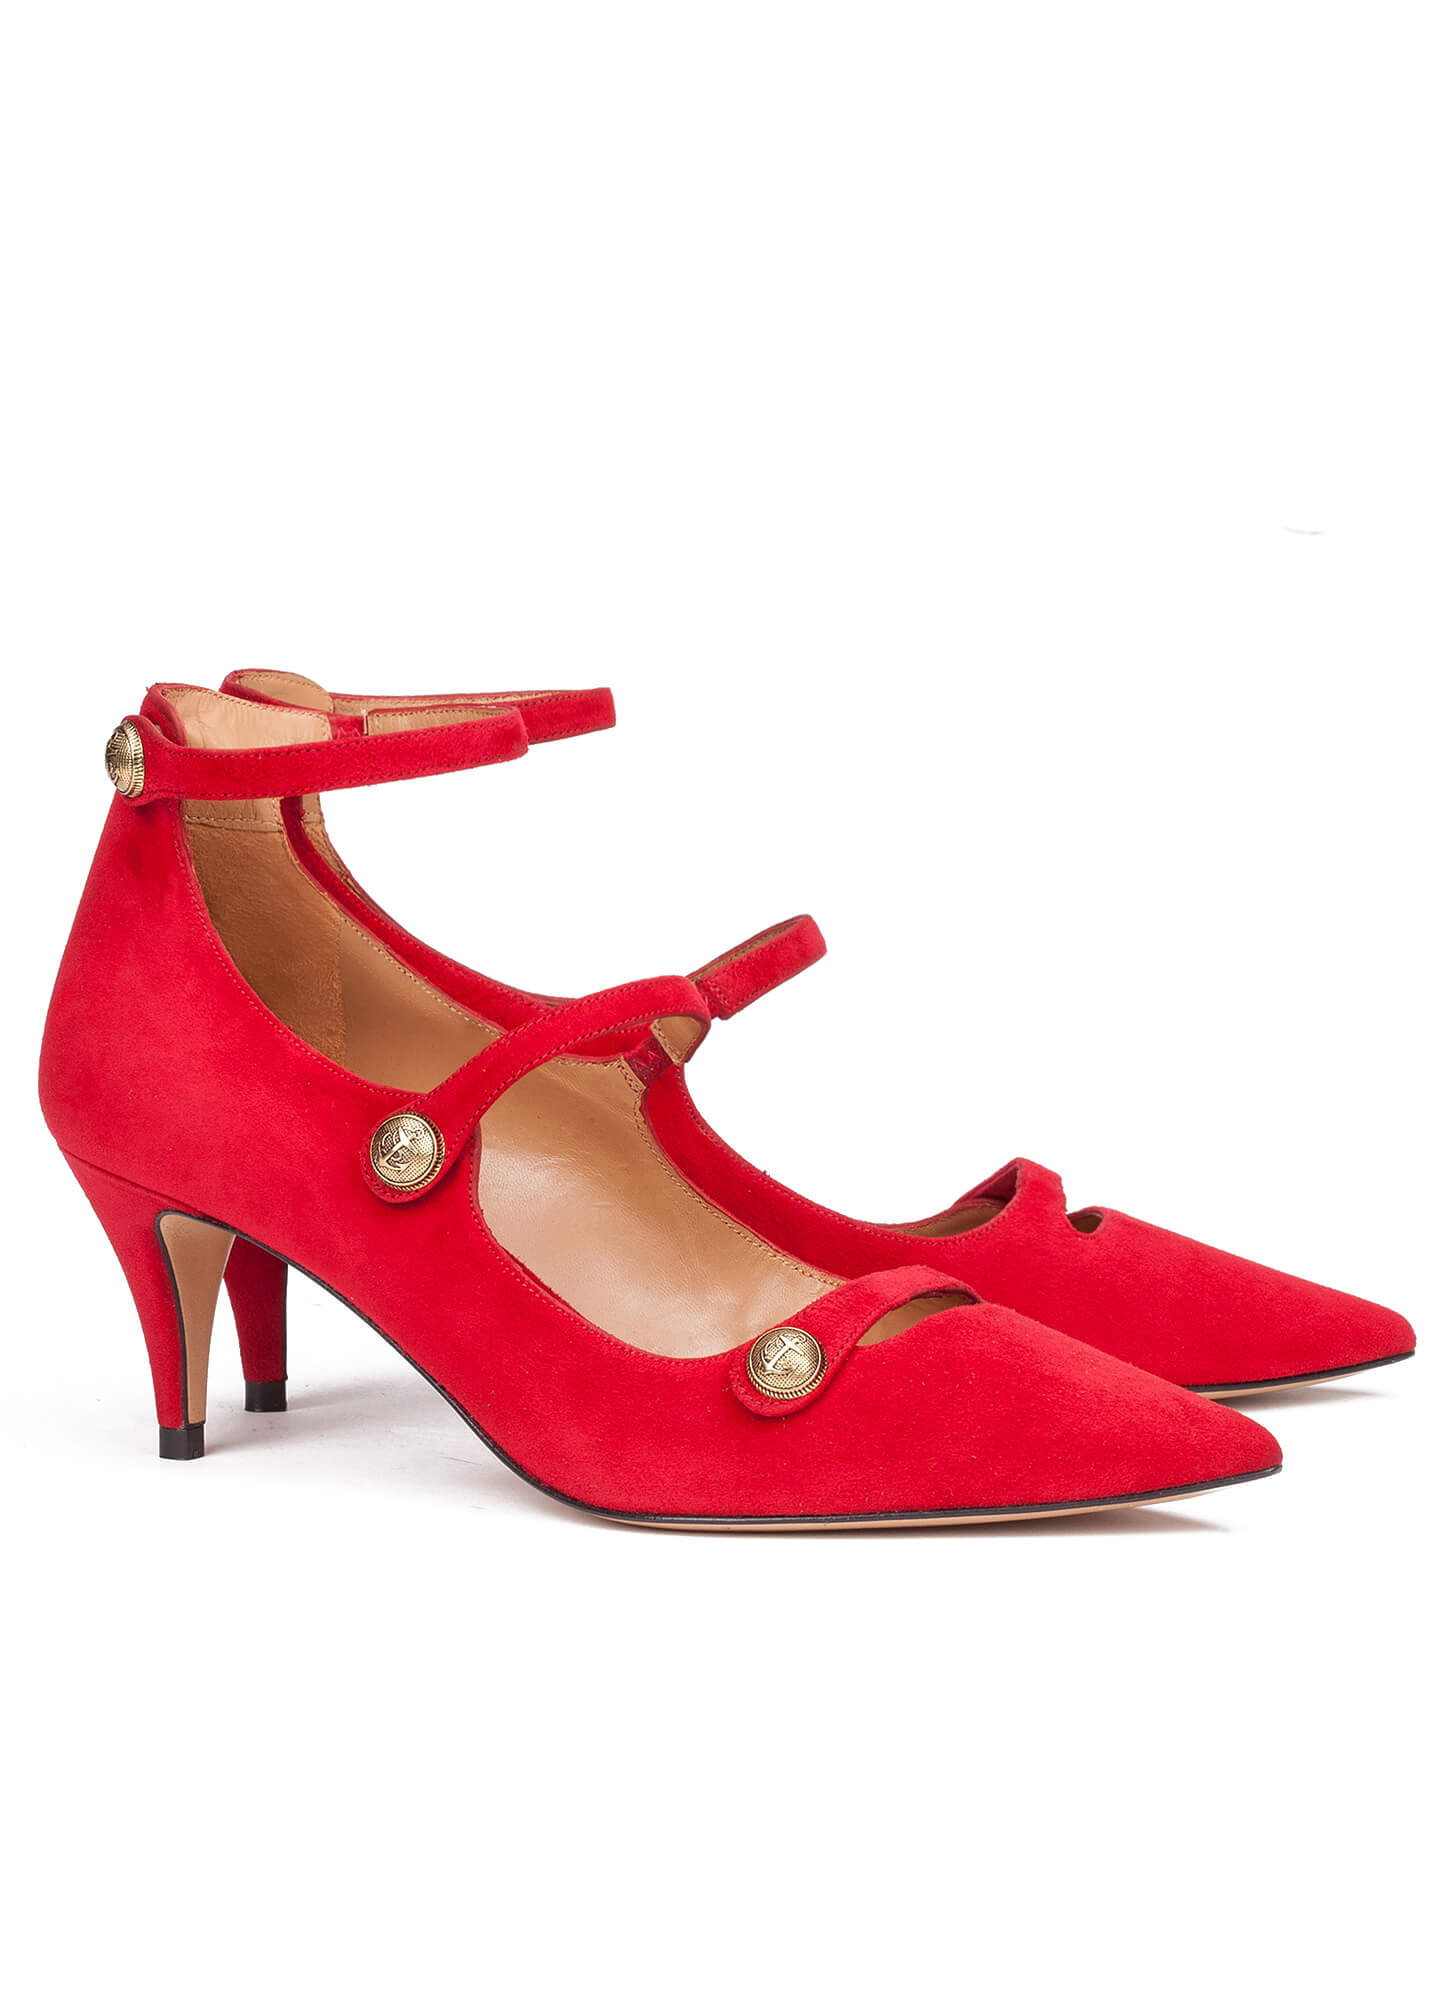 Red suede mid heel shoes - online shoe store Pura Lopez . PURA LOPEZ